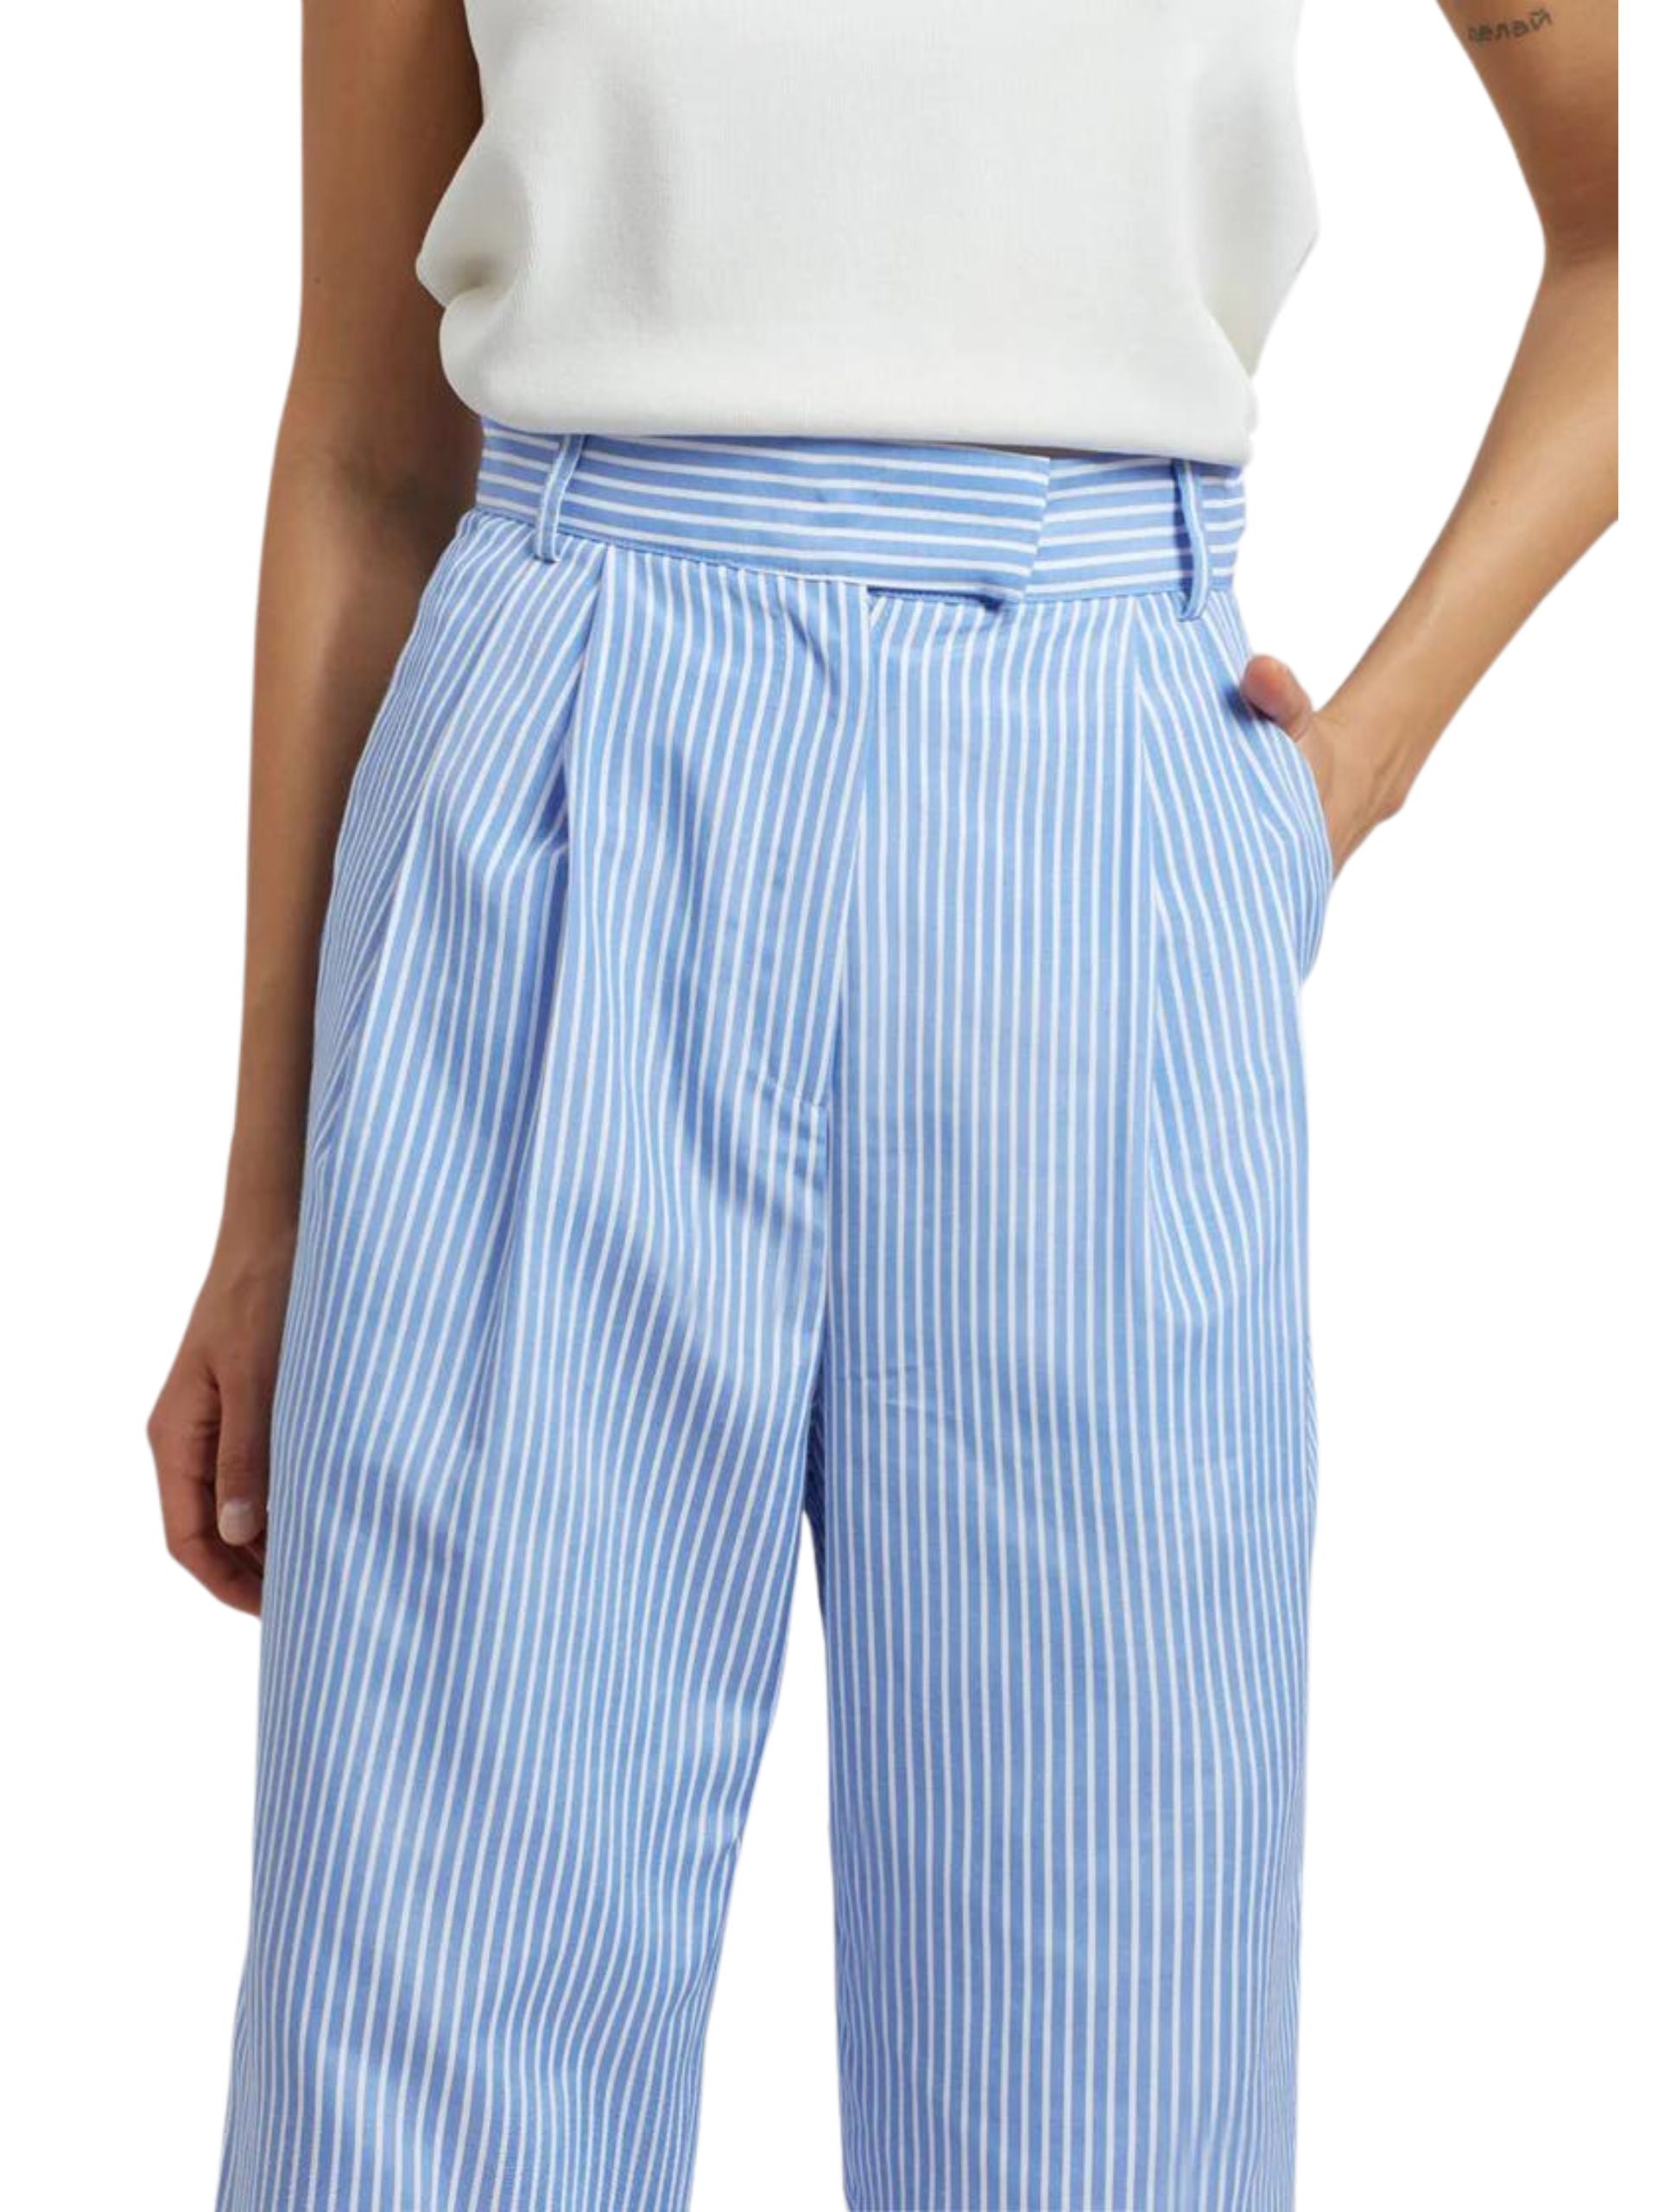 Preview Fashion Suit Trousers | Target Australia